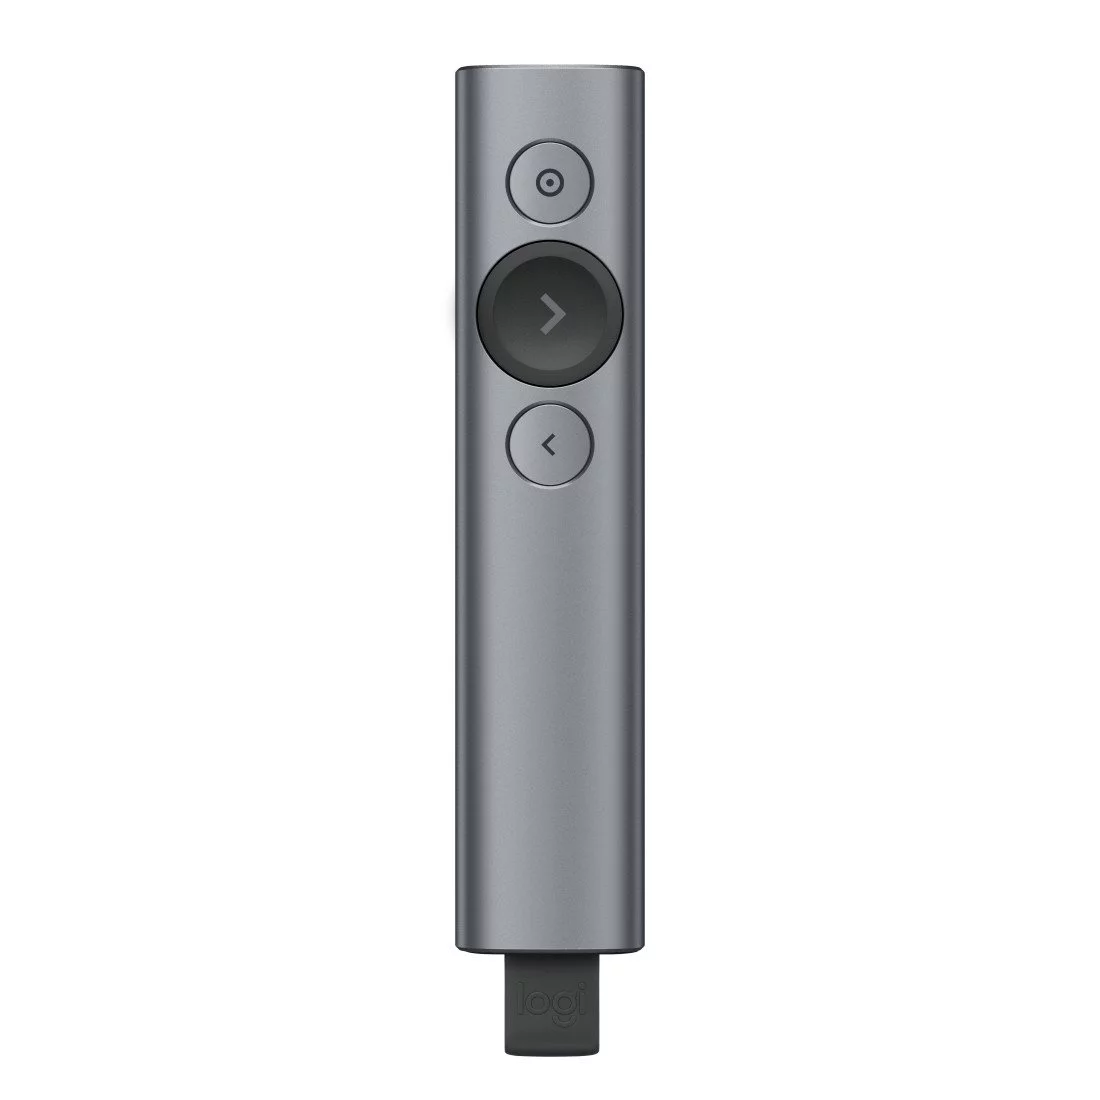 Logitech R500 Laser Presentation Remote télécommande Bluetooth/RF Graphite